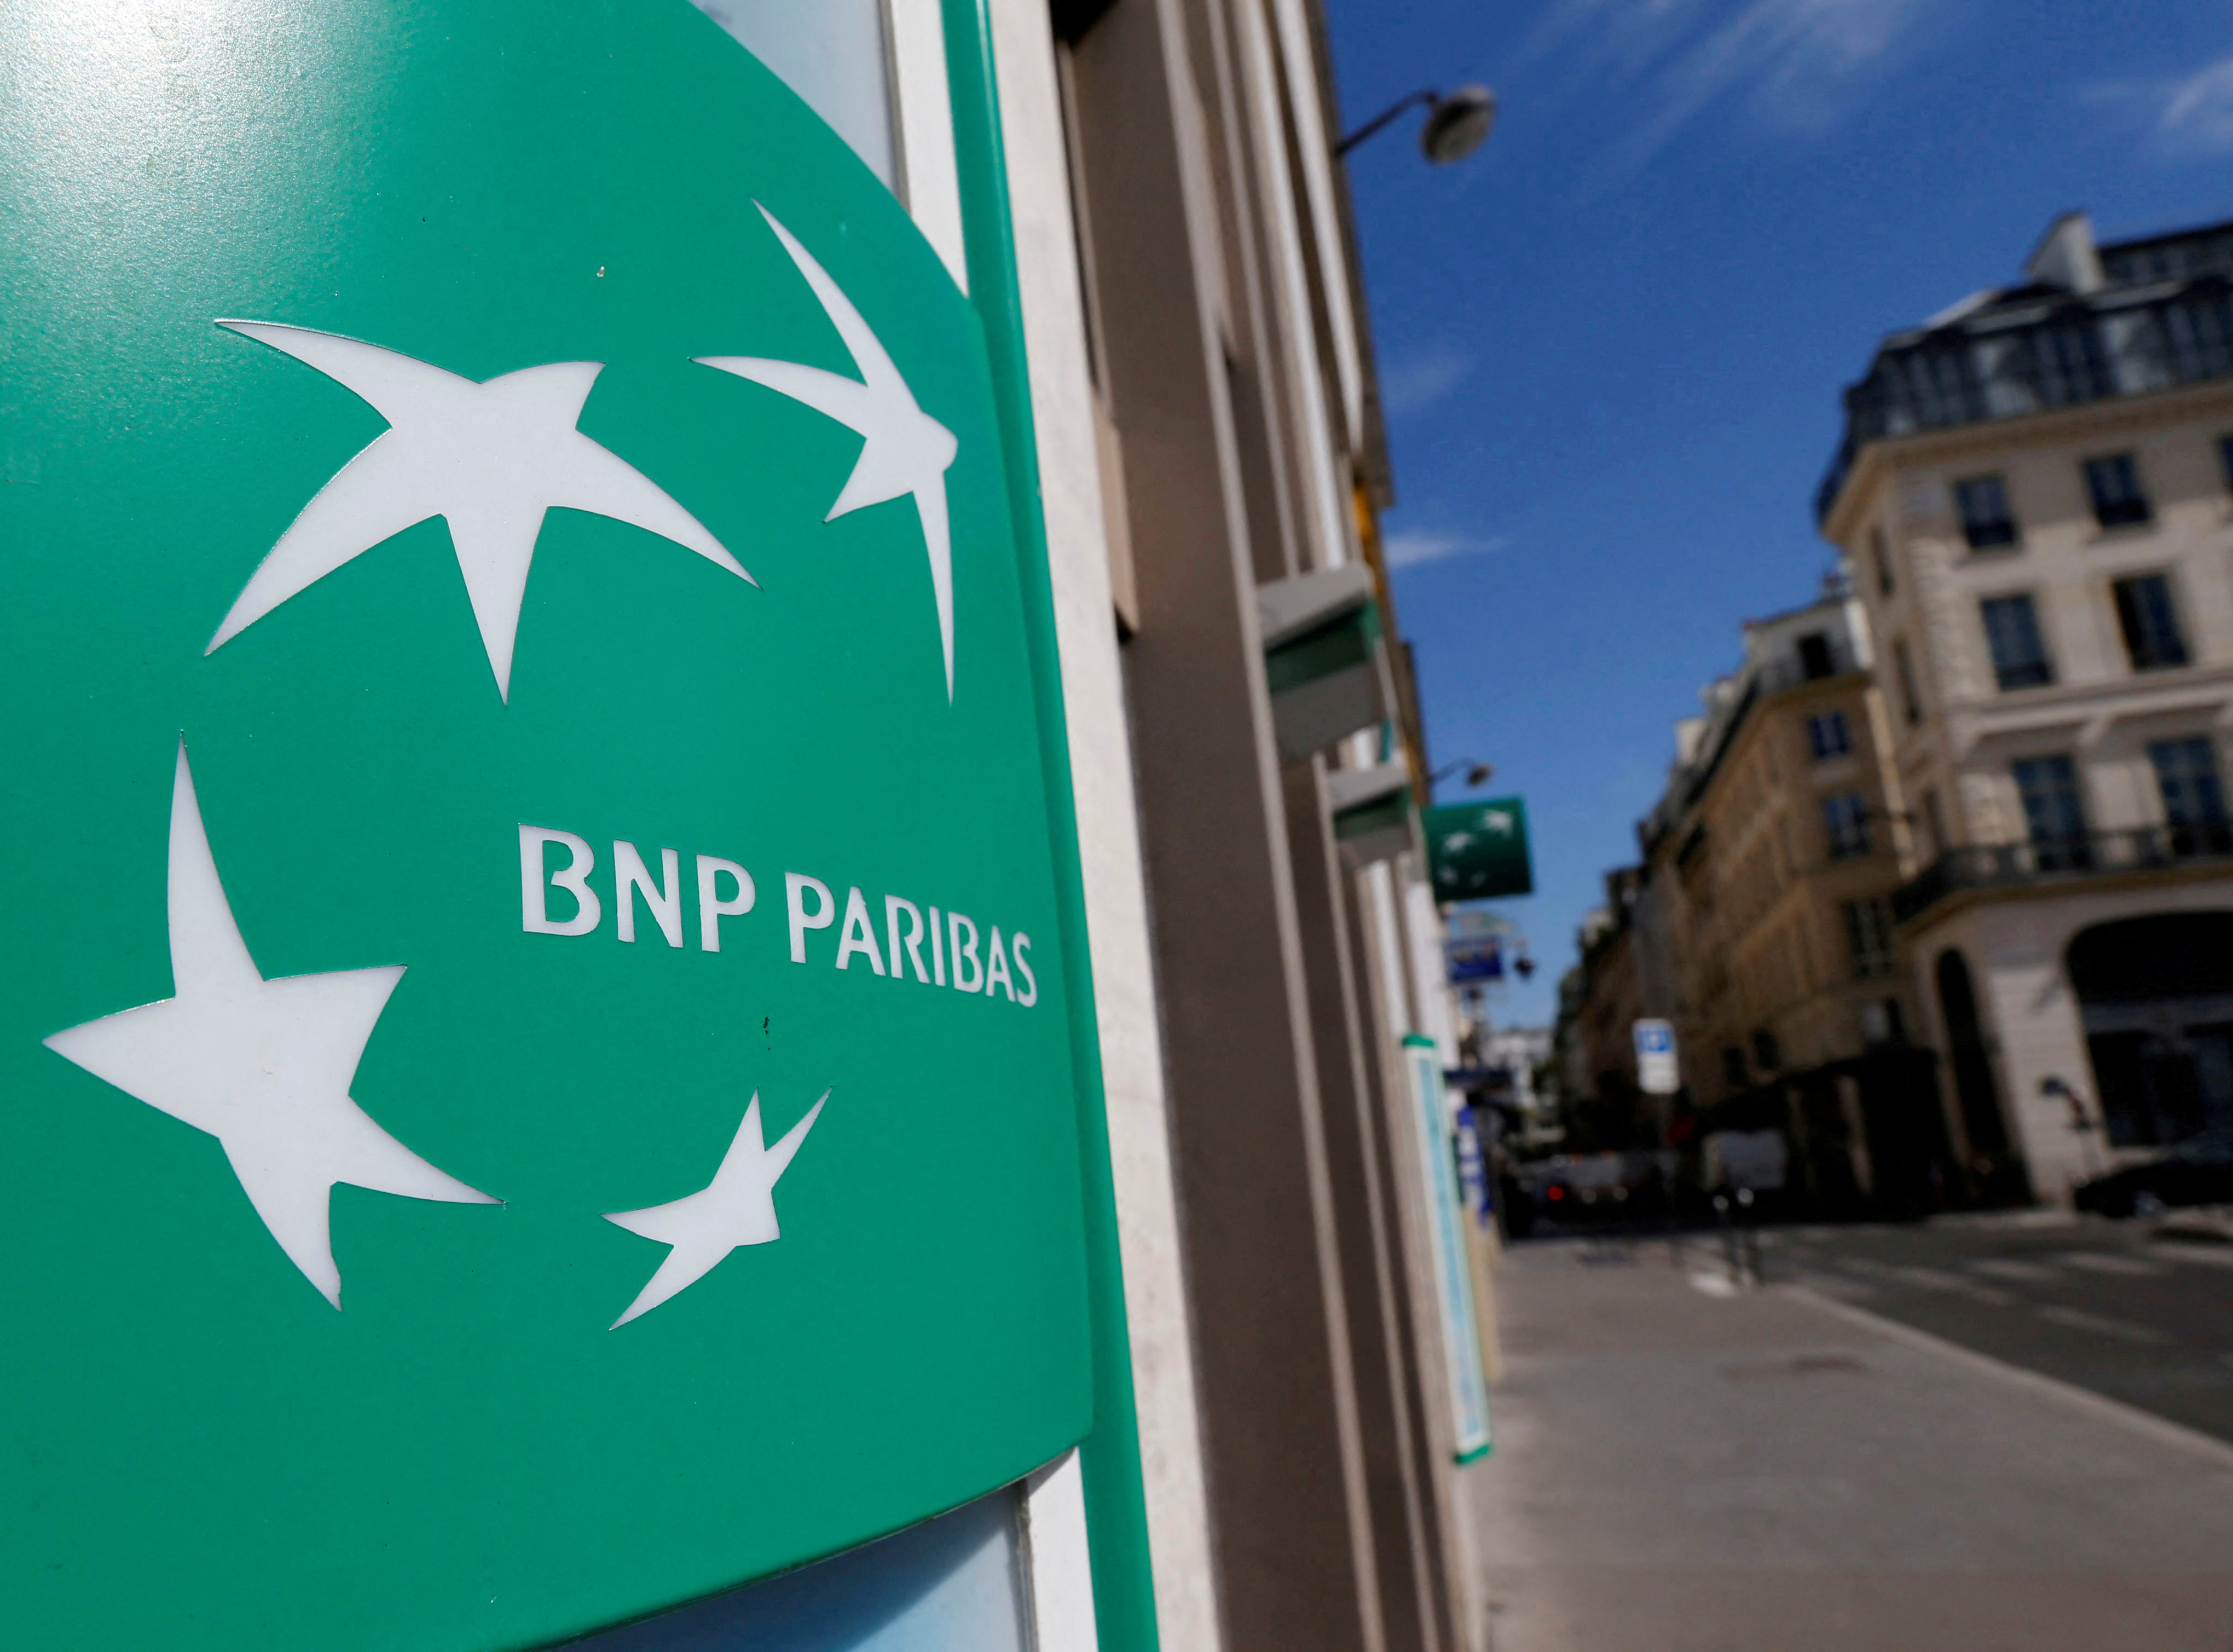 Le paquebot BNP Paribas consolide son leadership en Europe